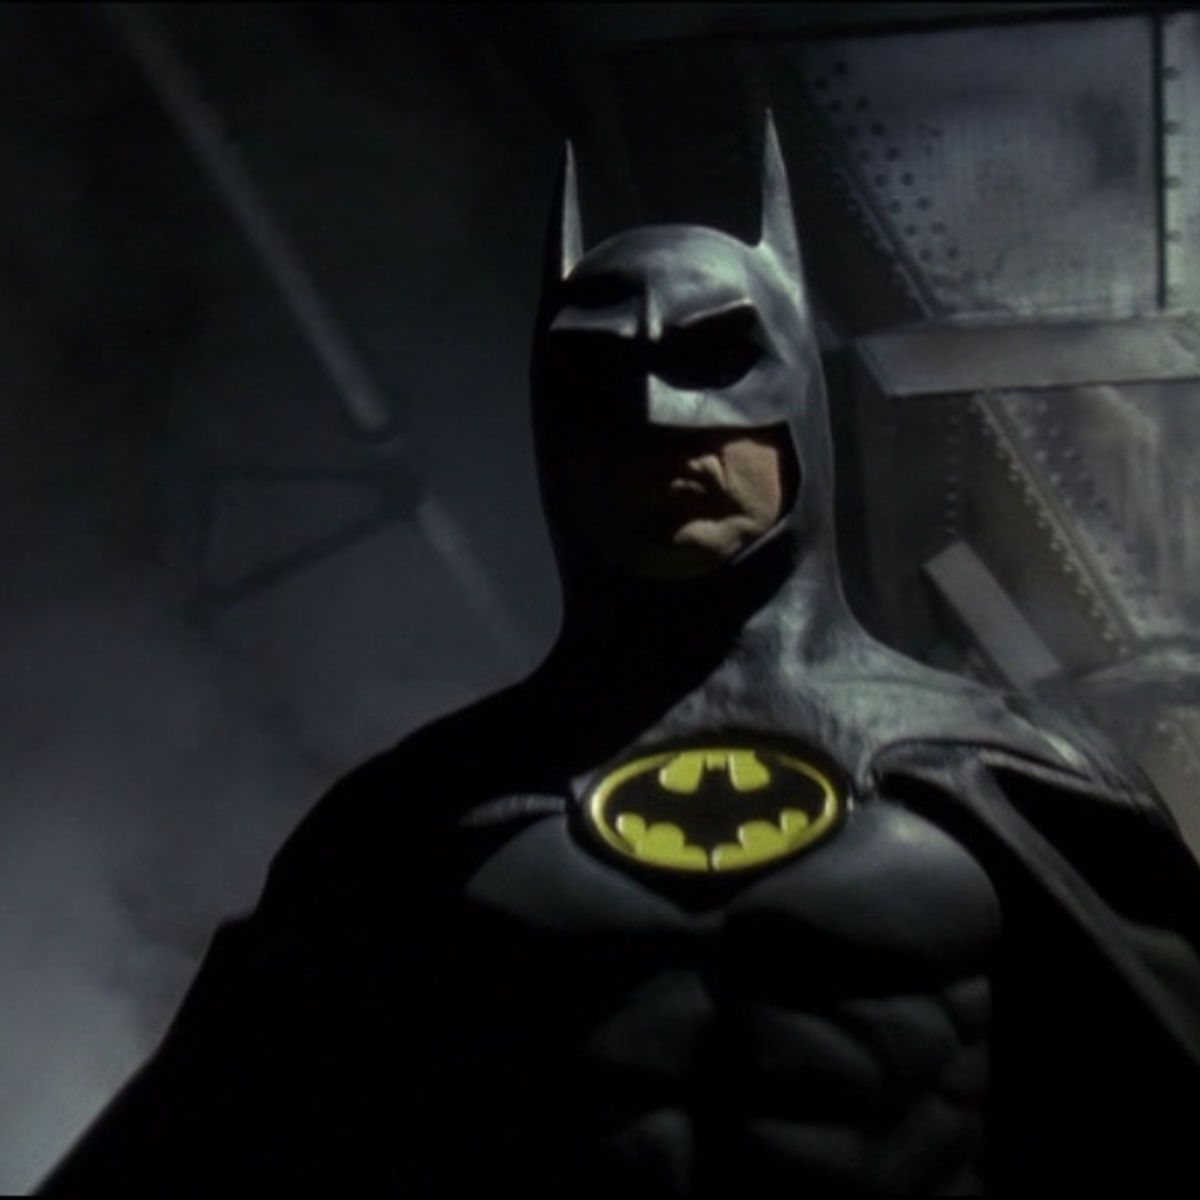 Tim Burton's 1989 Batman movie gadgets are well worth remembering